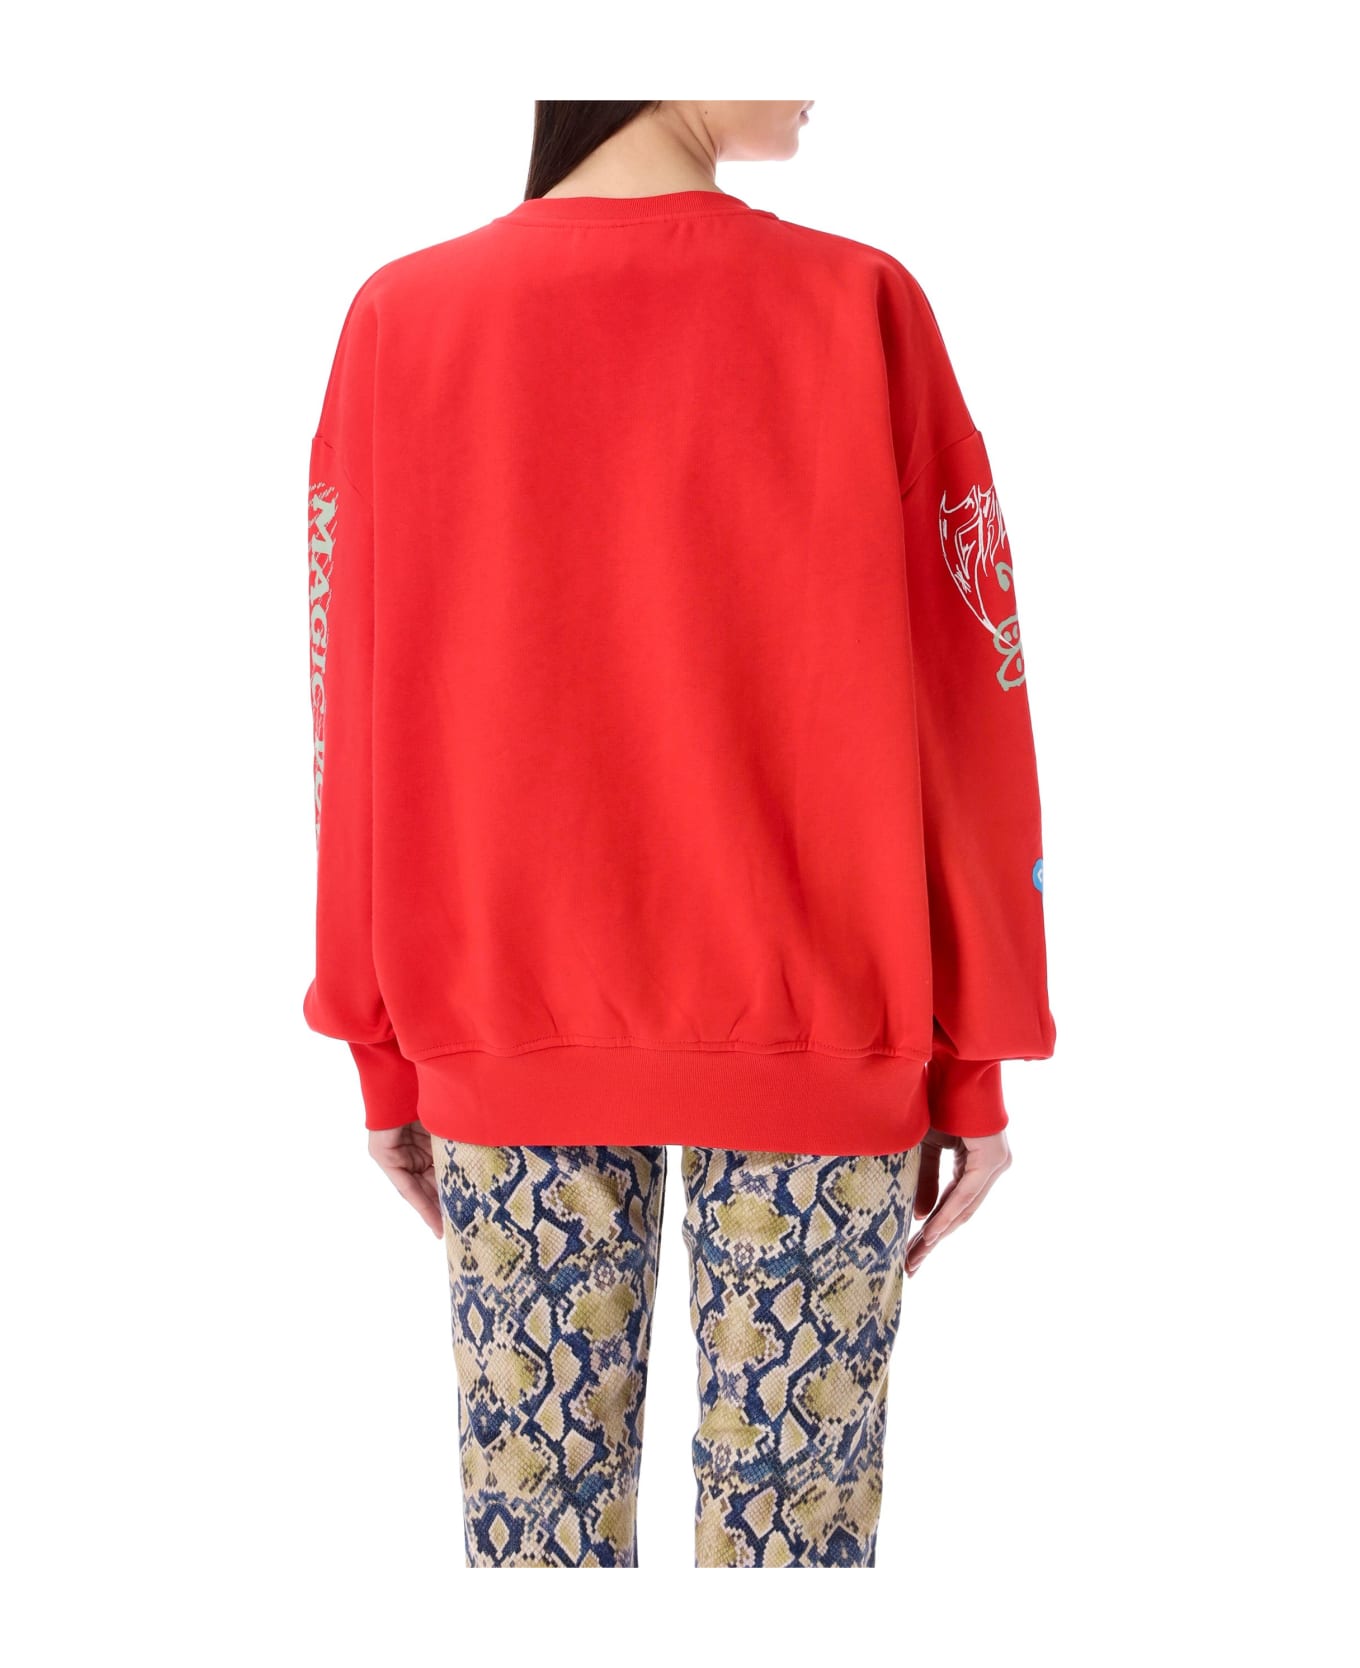 Ganni Flower Sweatshirt - RED フリース